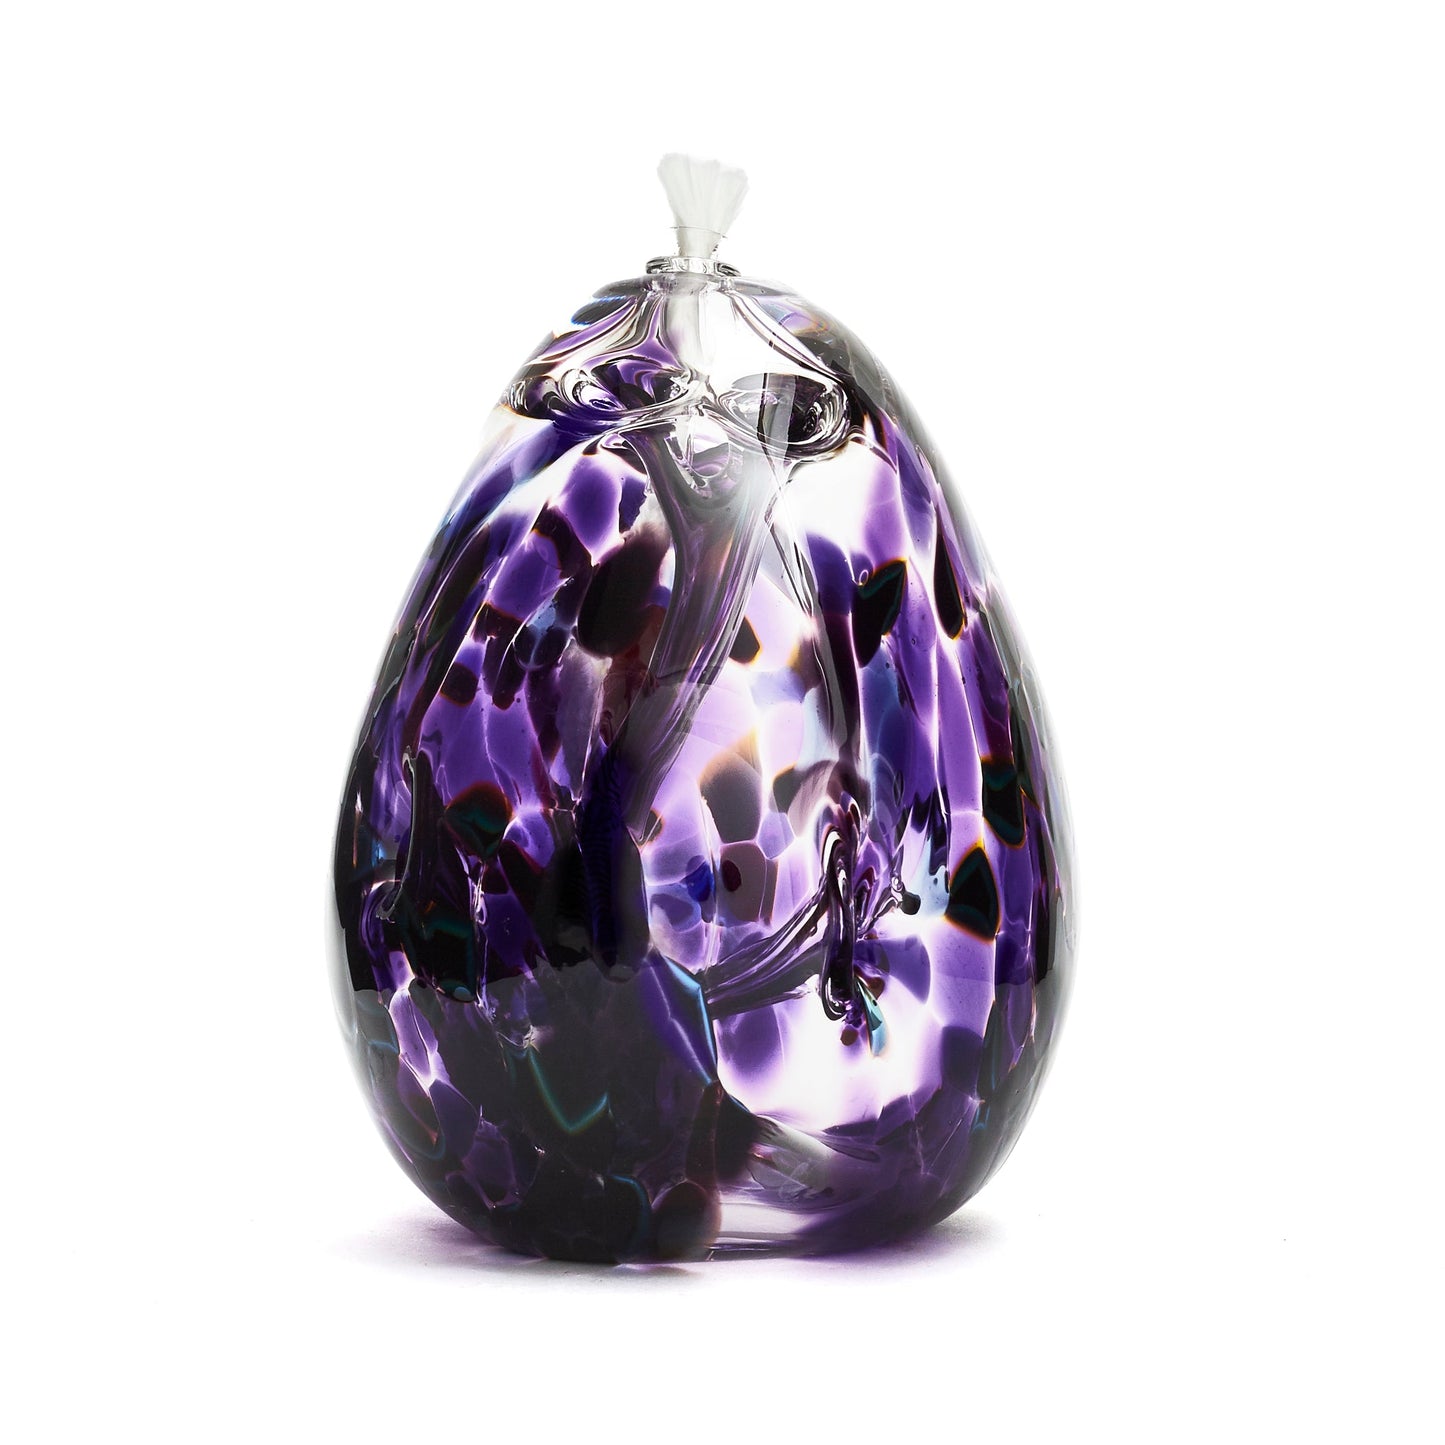 Handmade tall teardrop purple glass oil lamp. Made in Ontario Canada by Gray Art Glass.